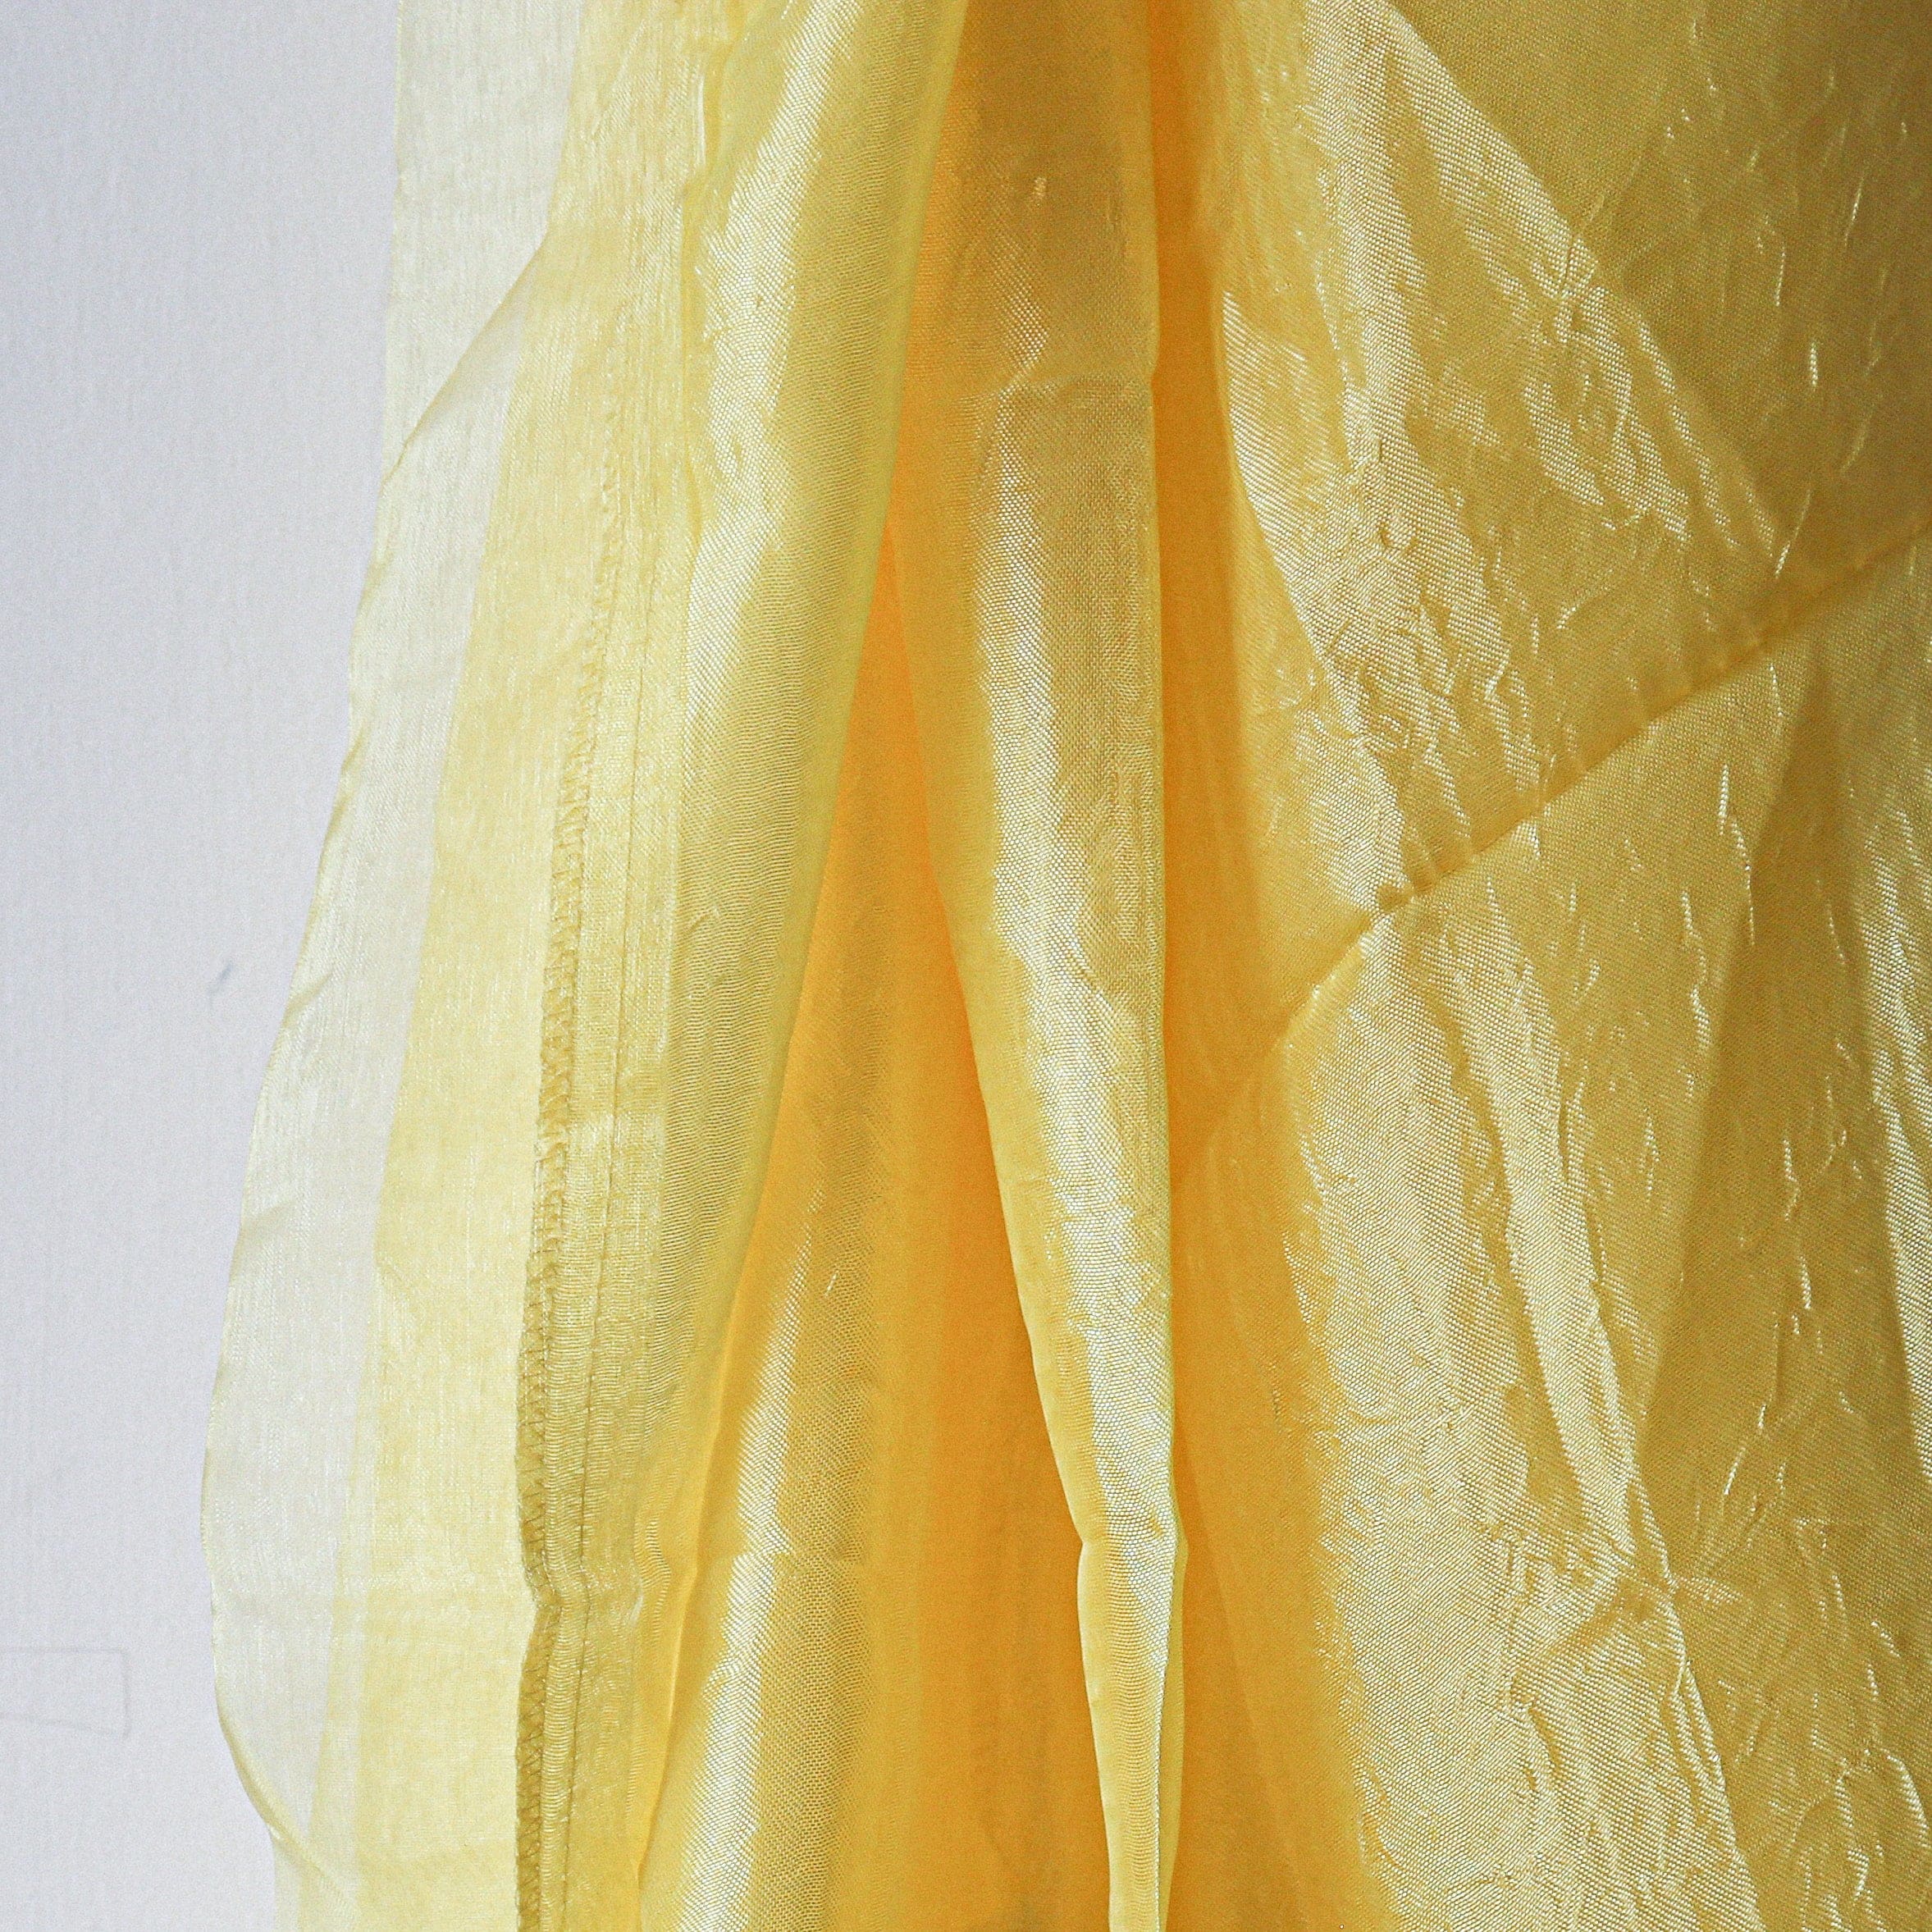 shawl Salers - Yellow - shawl